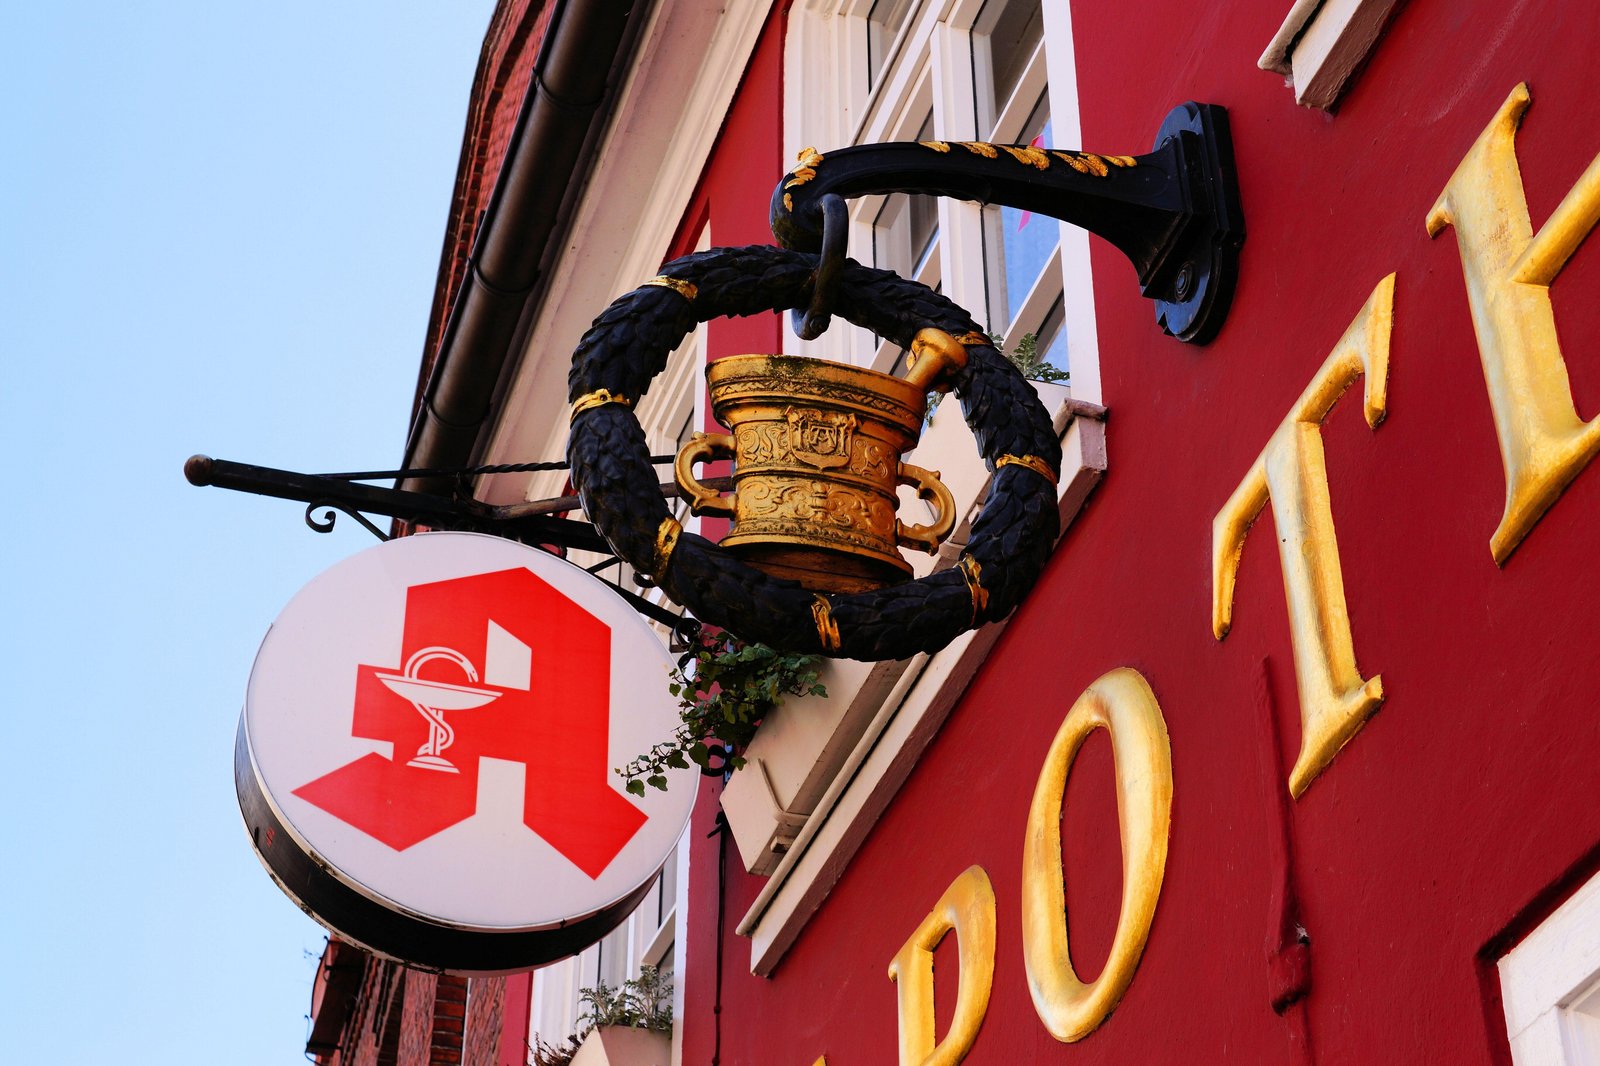 Obrázek symbolu německé lékárny